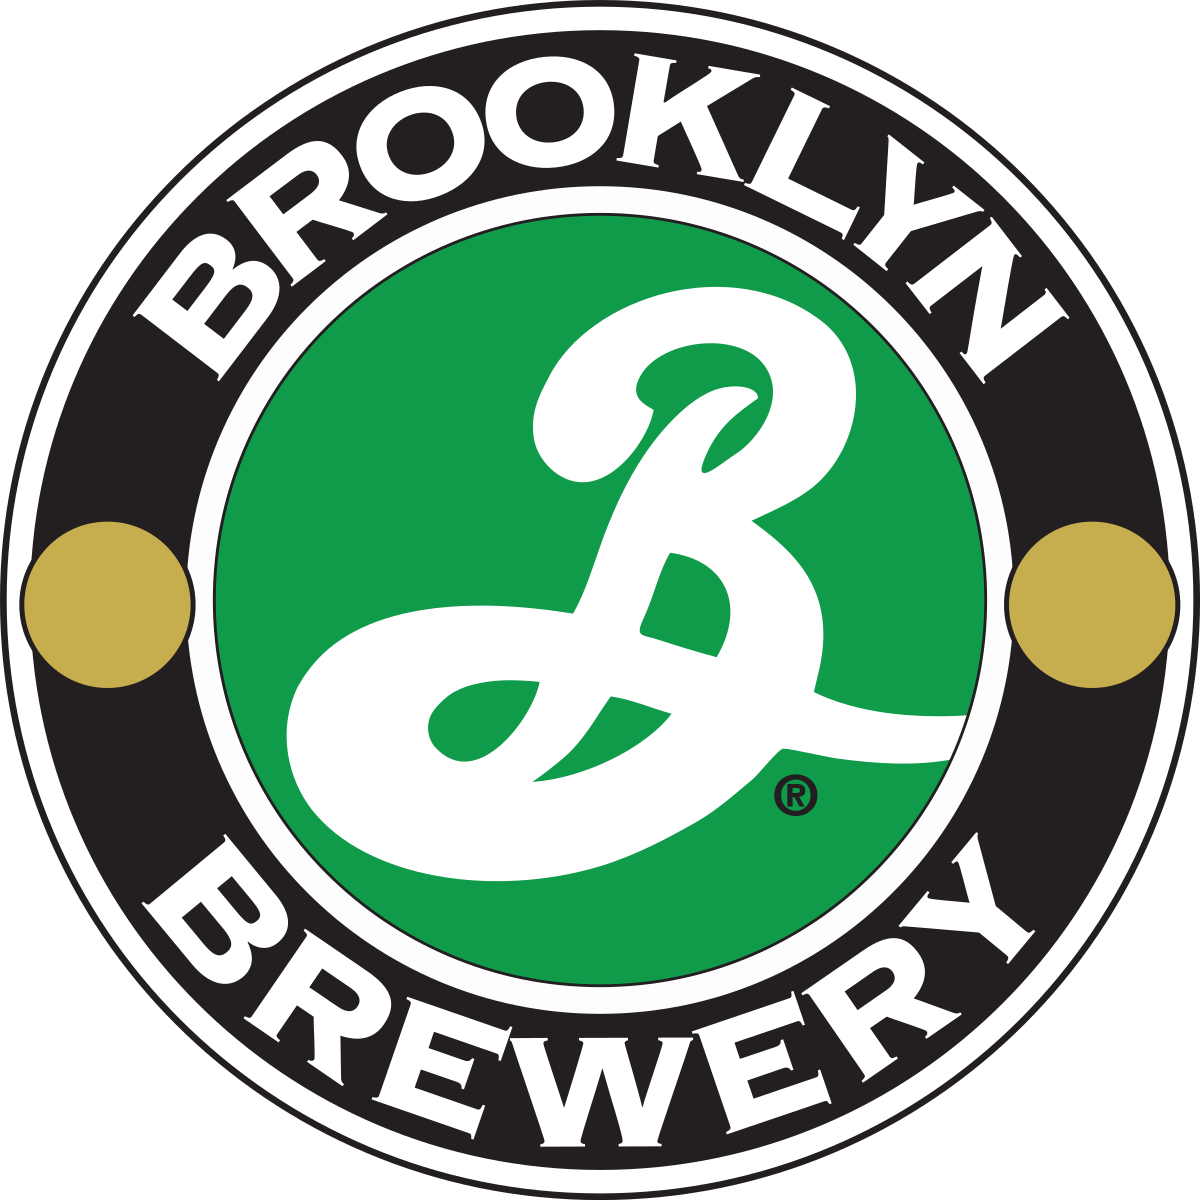 Brooklyn Brewery - Wikipedia